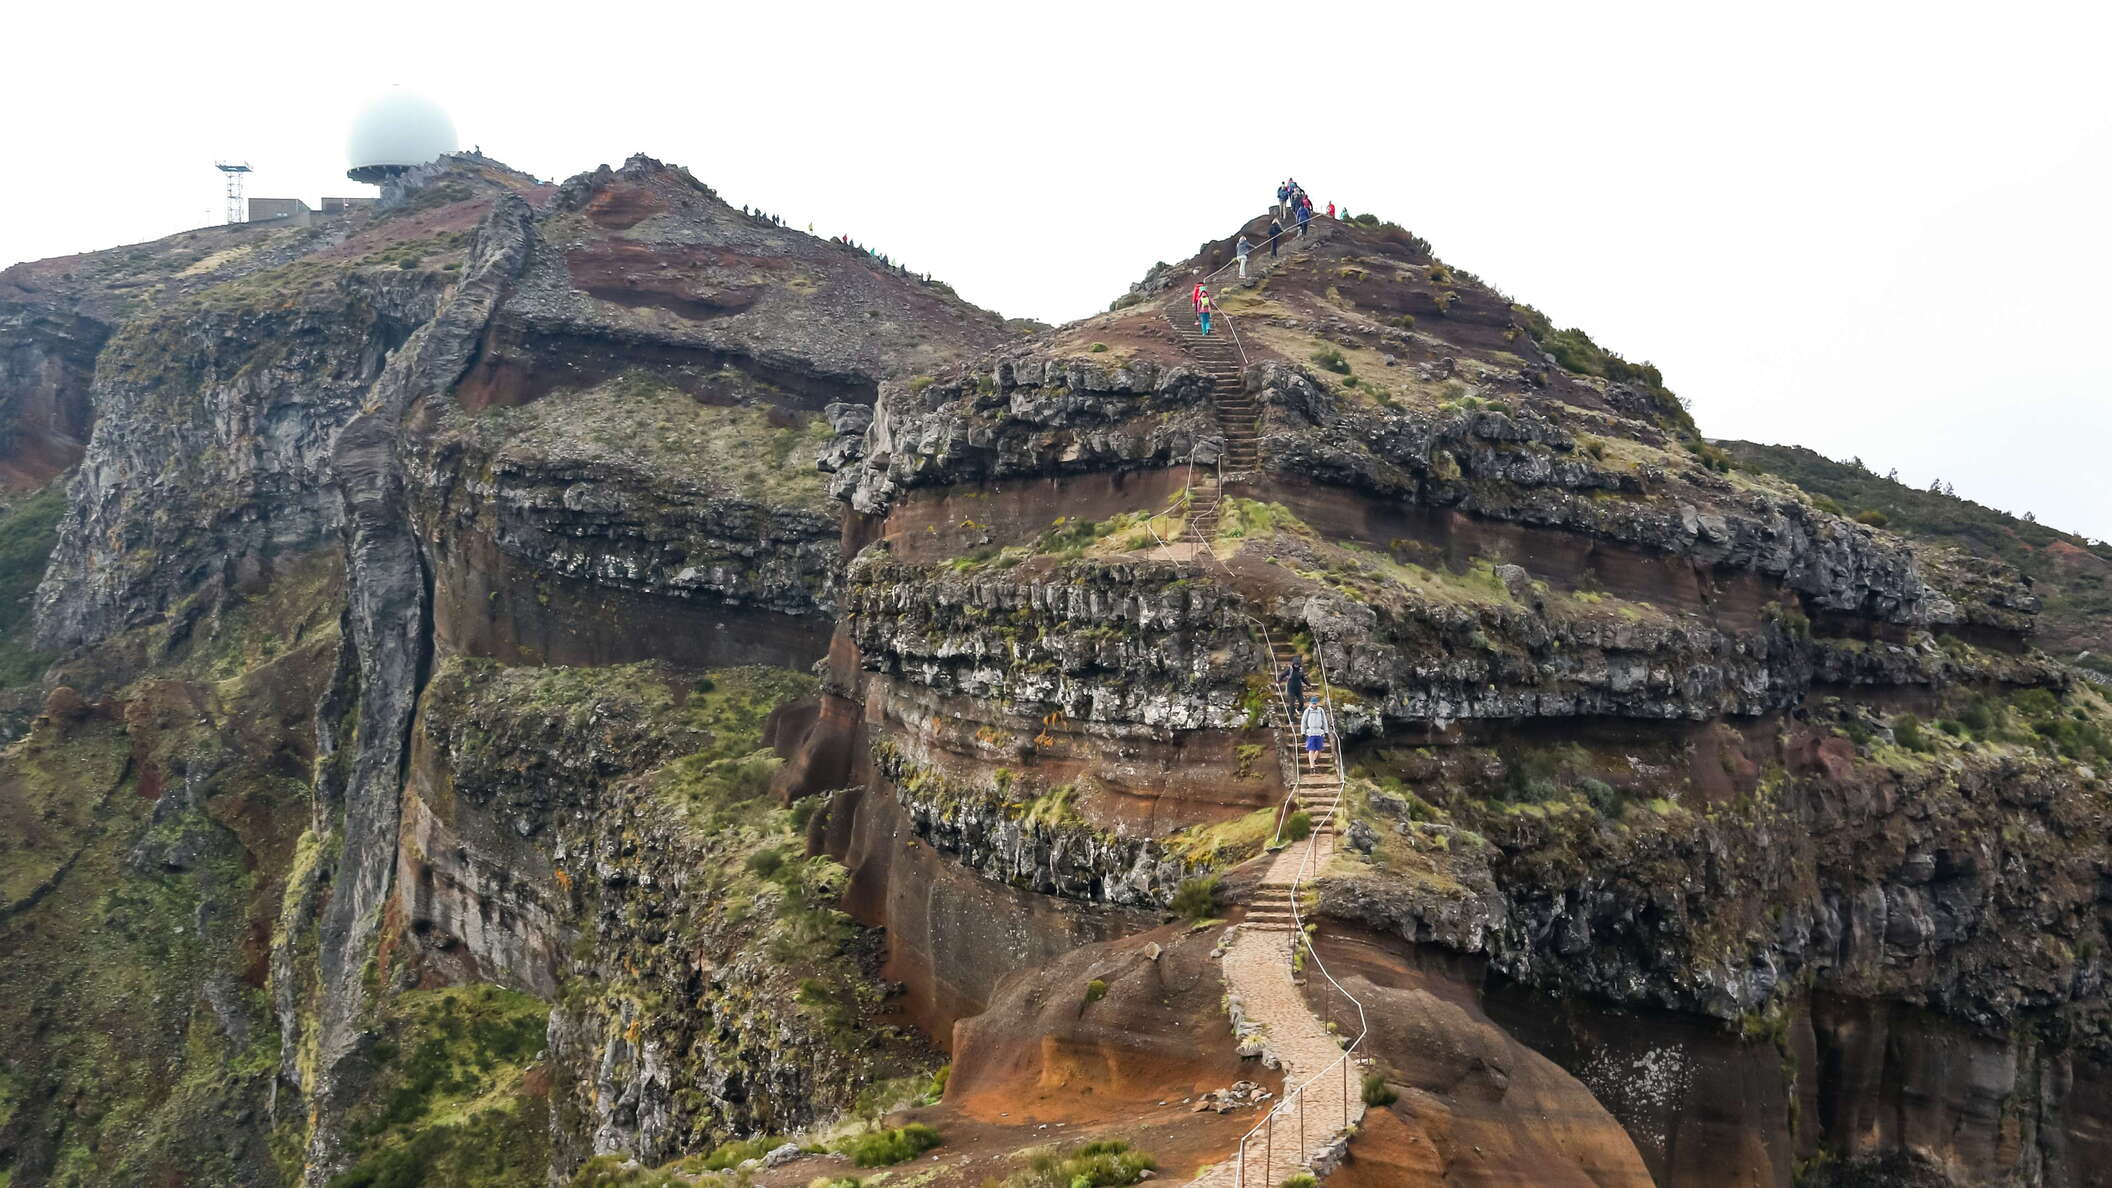 Pico do Arieiro | Volcanic layers and dike